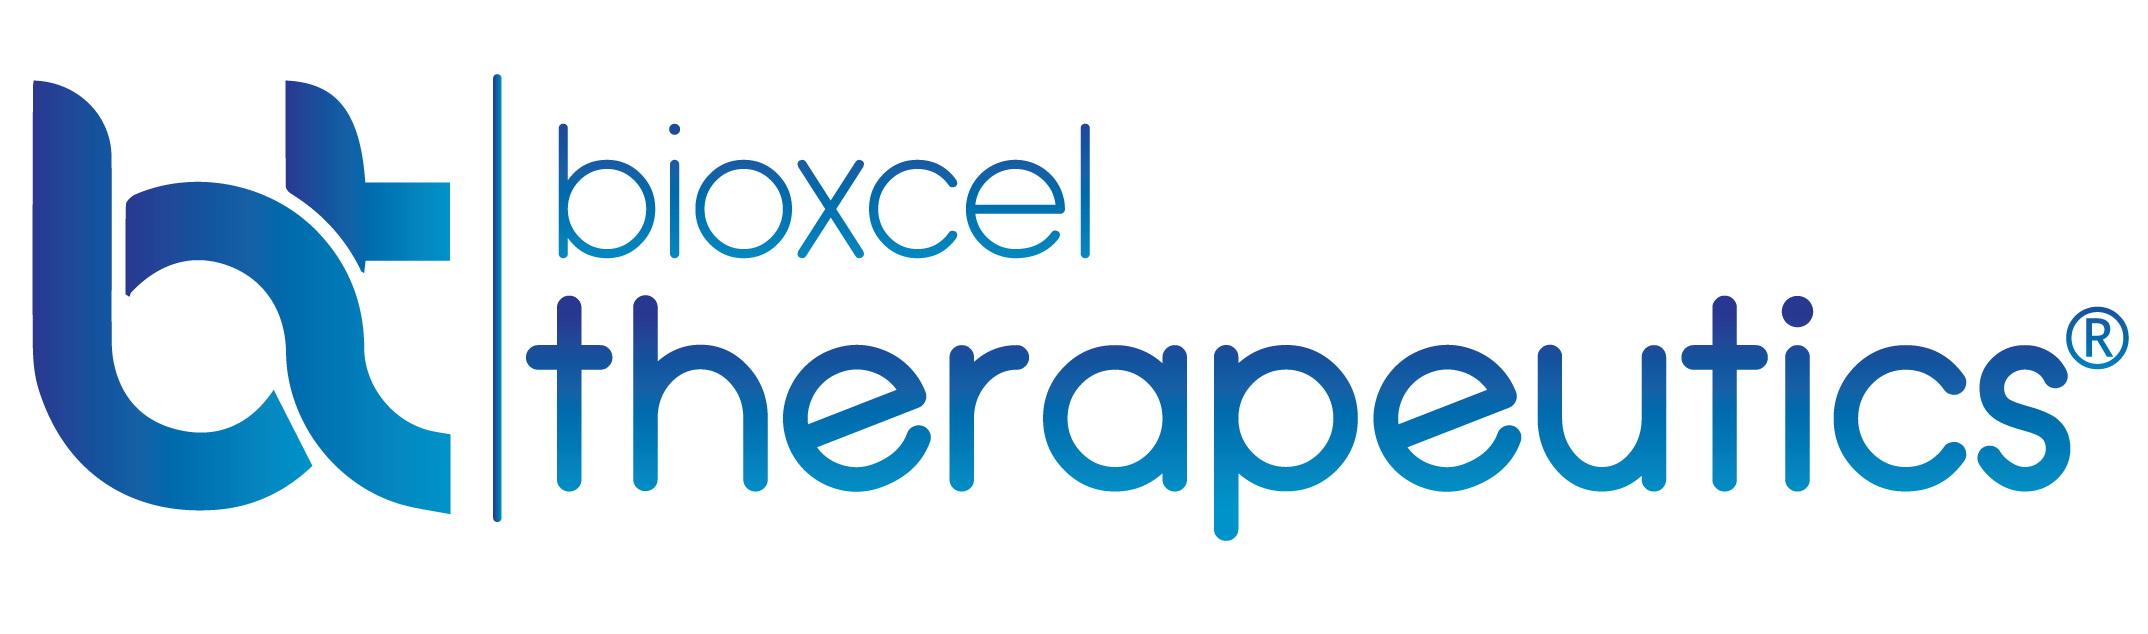 Bioxcel-Therapeutics-logo